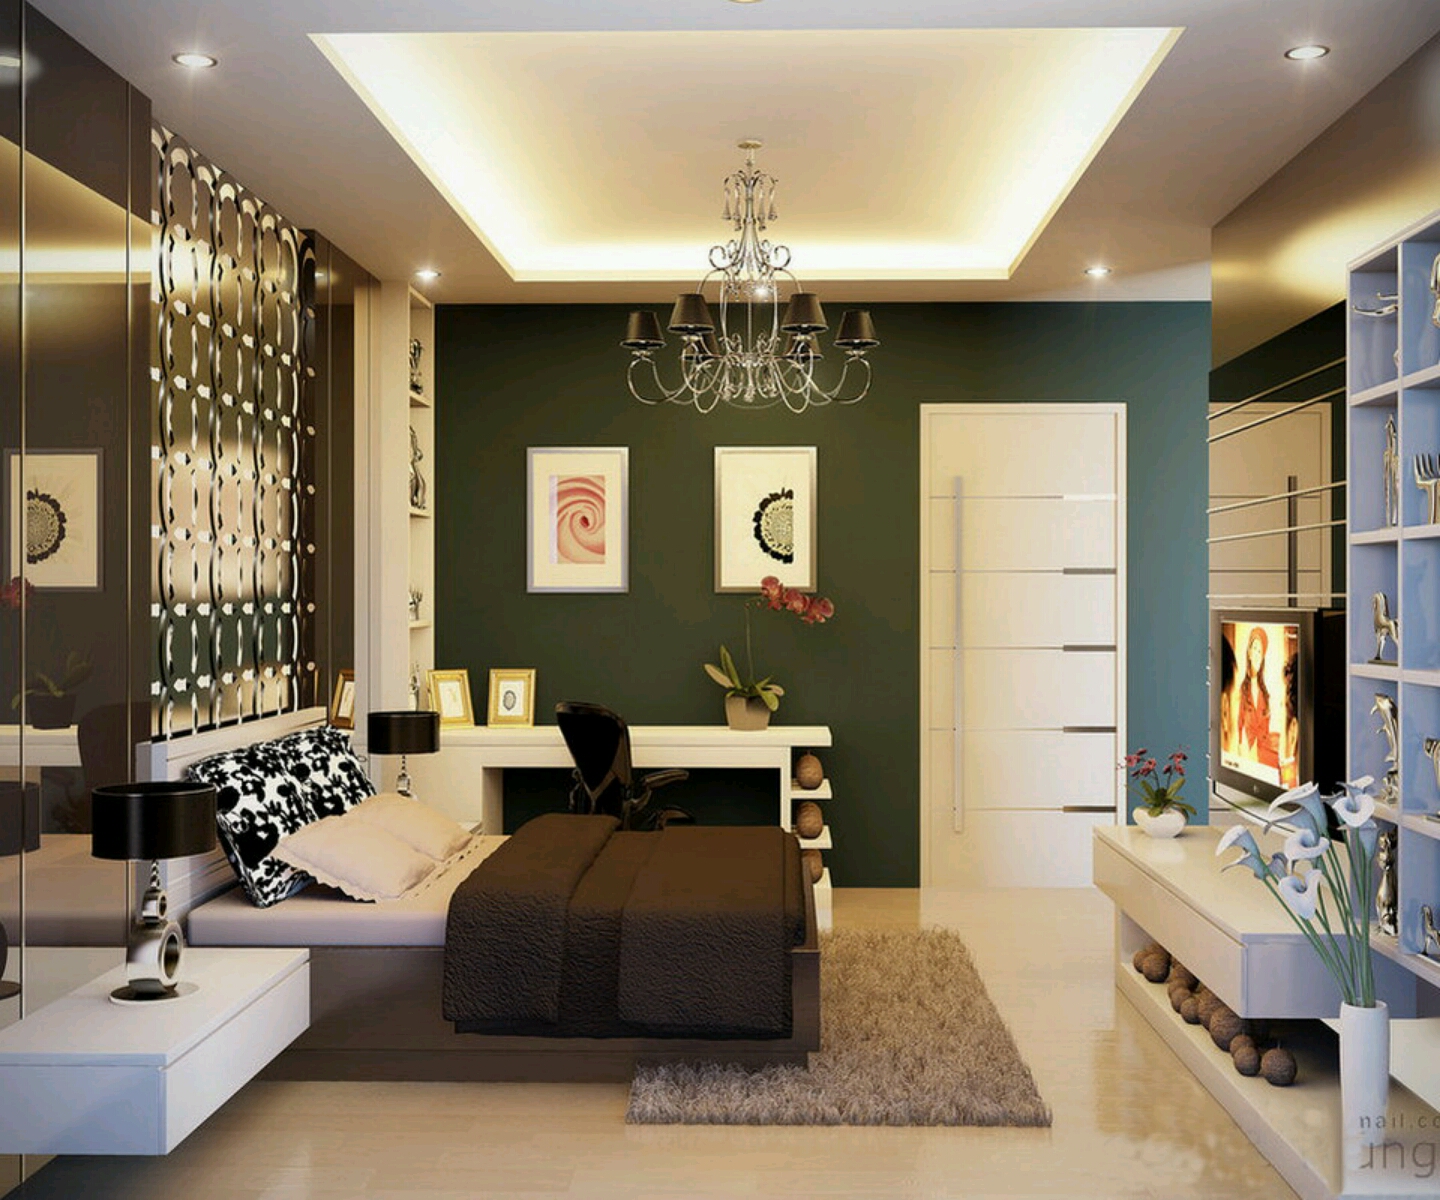 Desain Rumah Minimalis: Modern bedrooms designs best ideas.